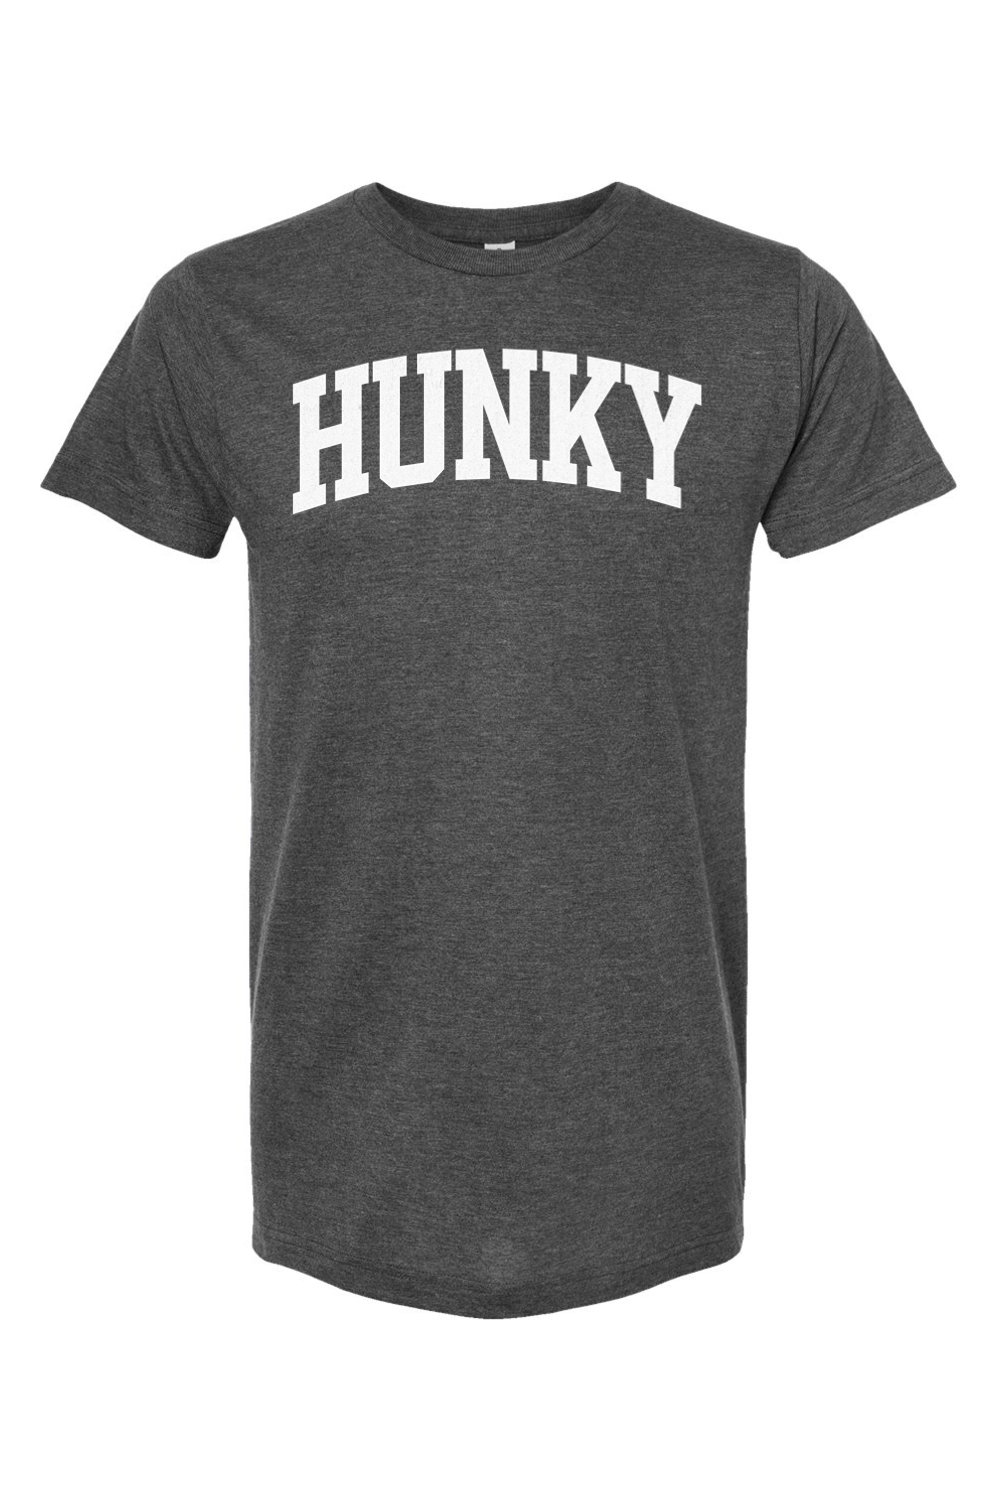 Hunky - Collegiate - Yinzylvania